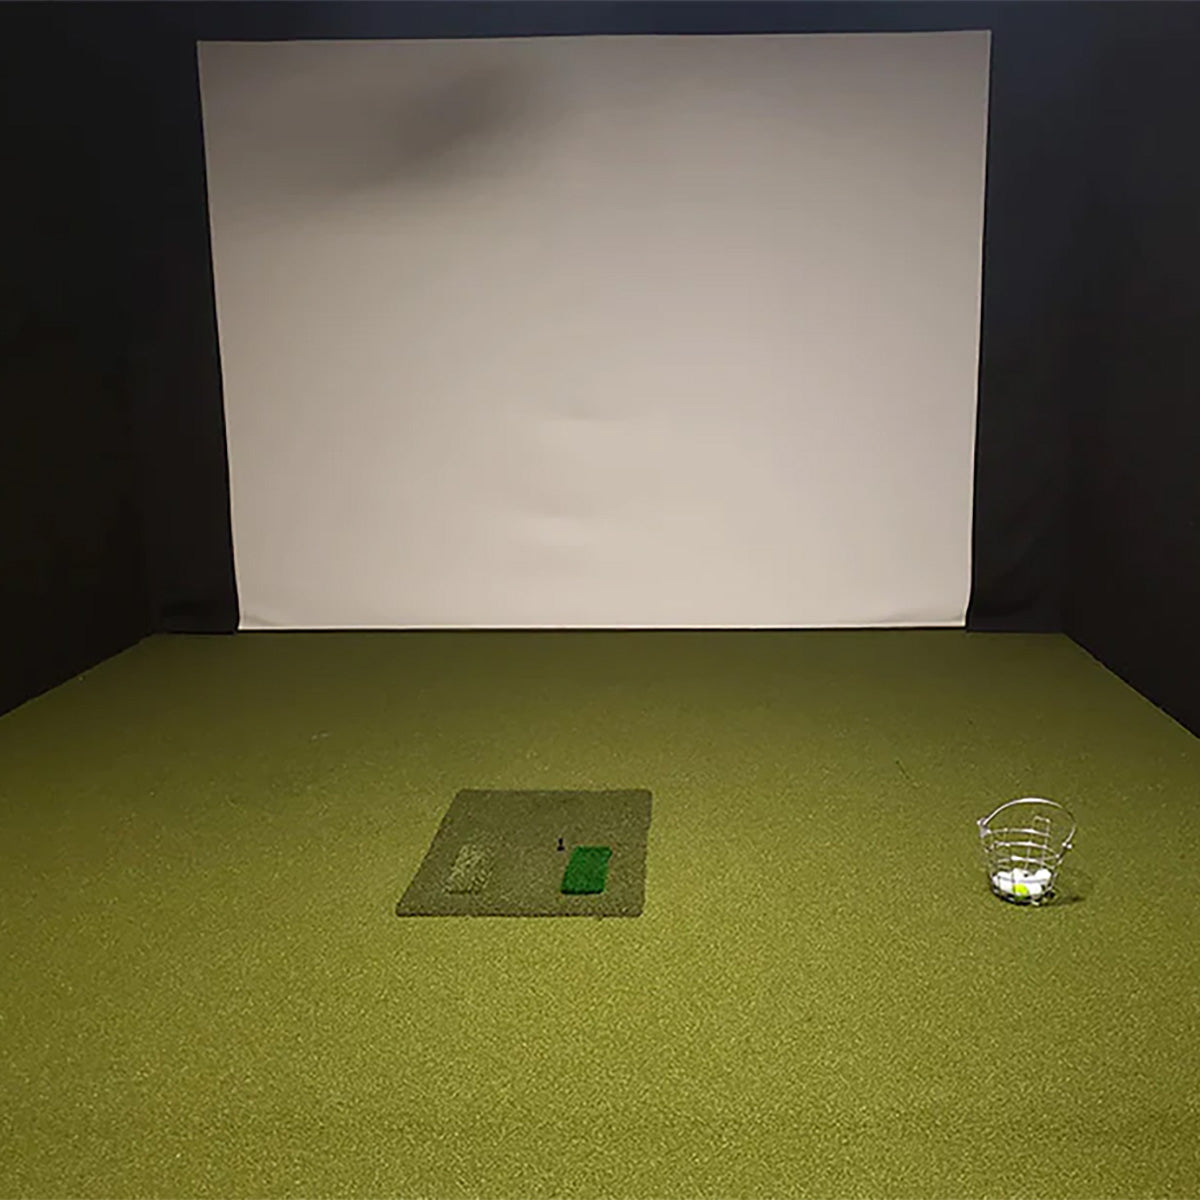 custom golf simulator enclosure - hard wall option